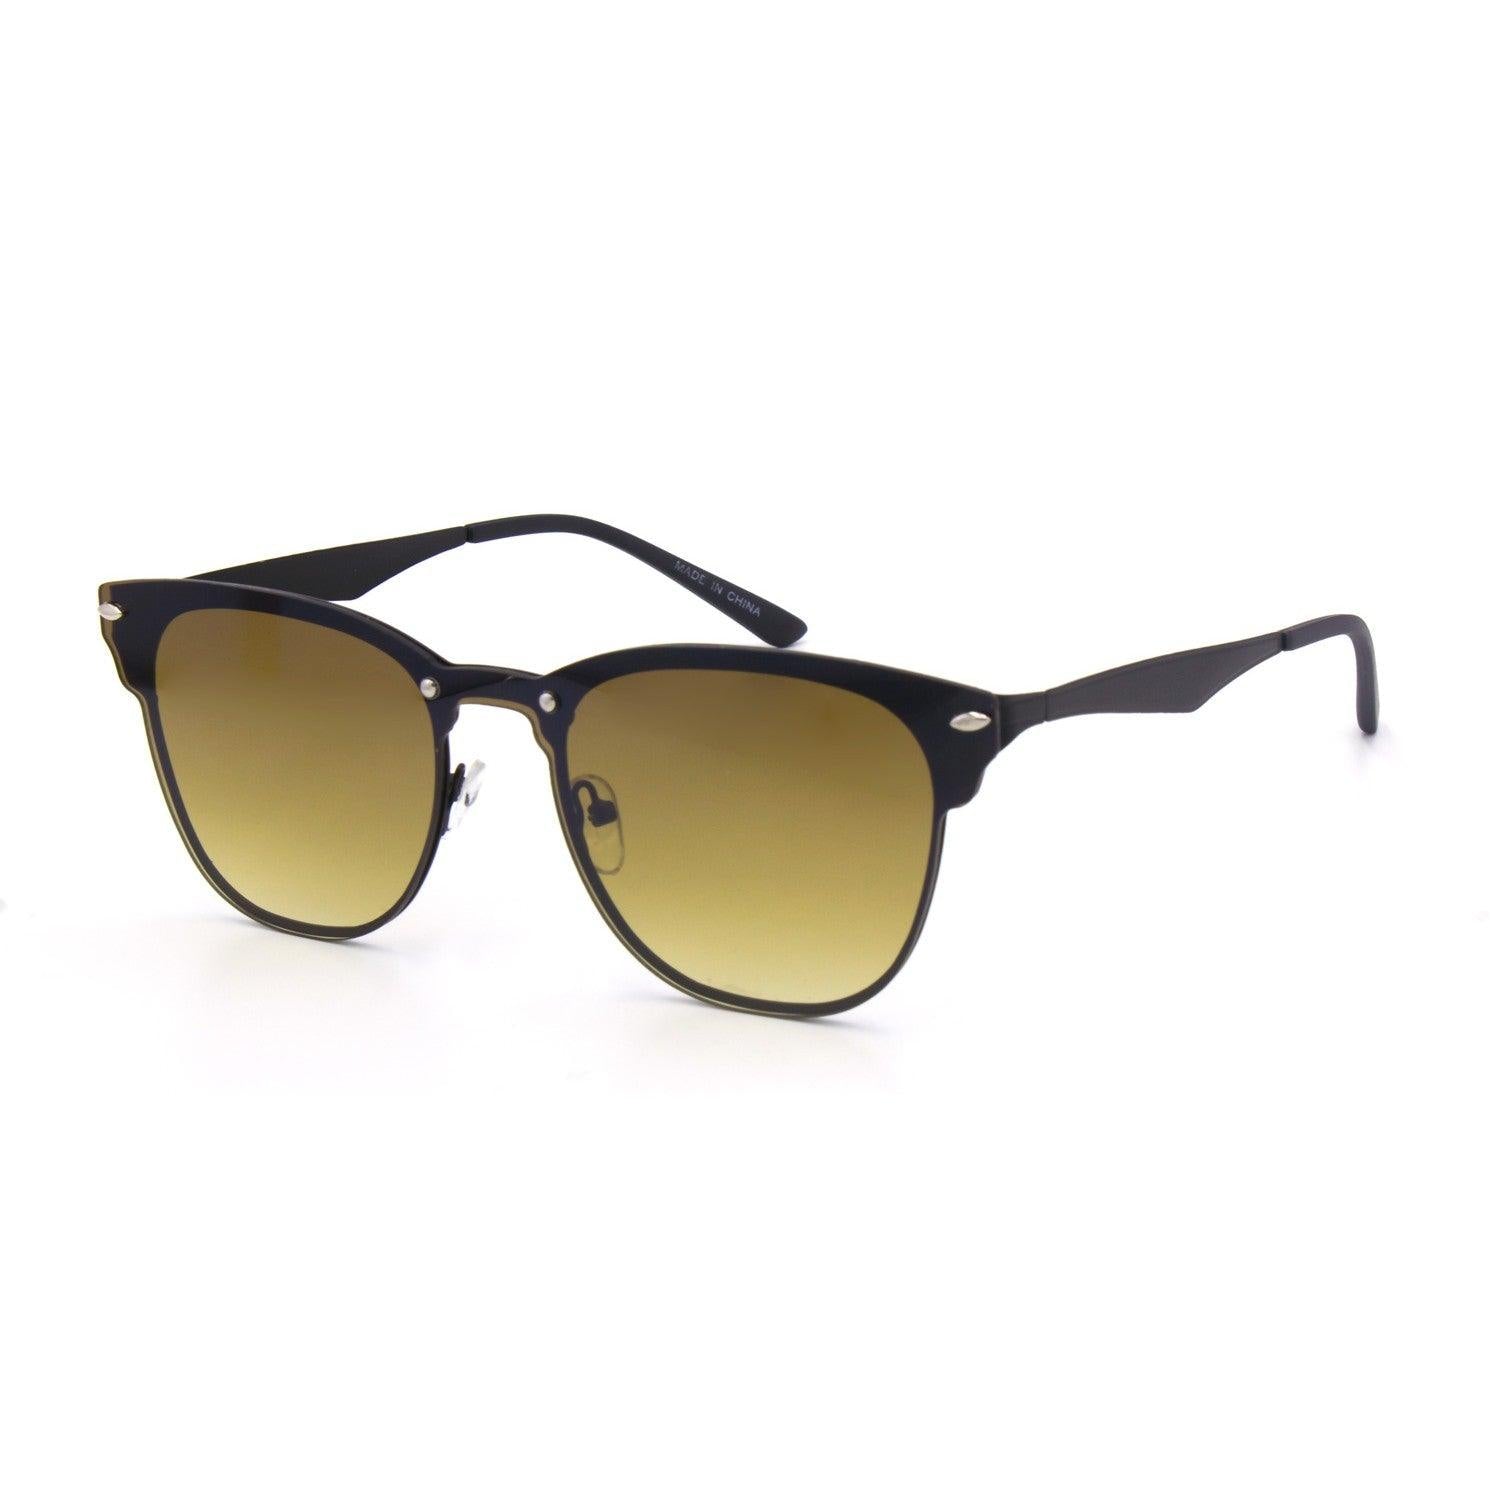 "Year 1000" Sqaure Frame Sunglasses - Weekend Shade Sunglasses